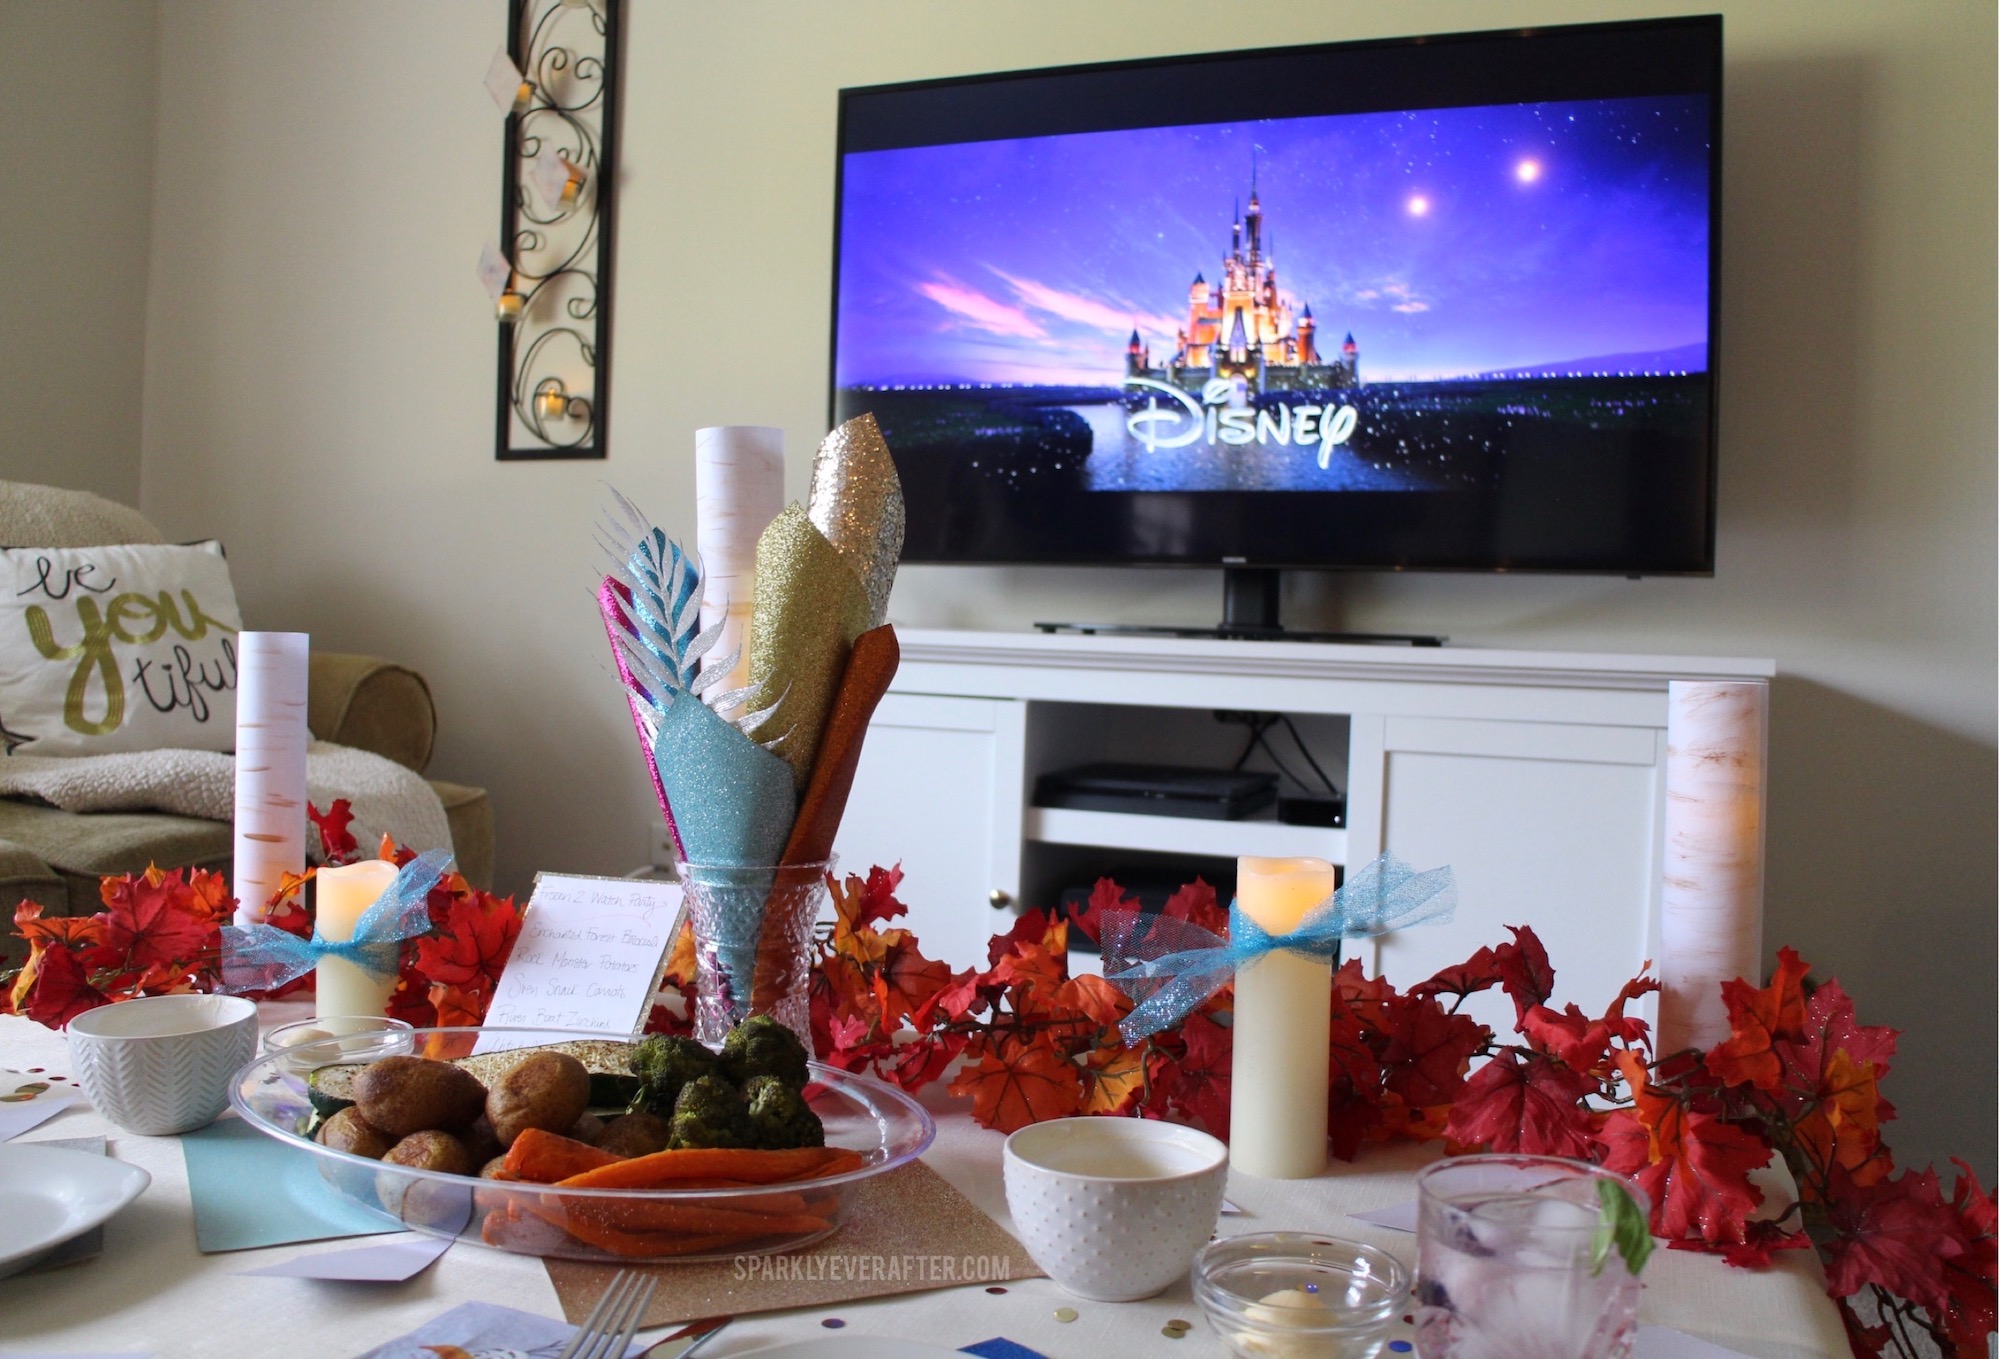 Disney movie watch party